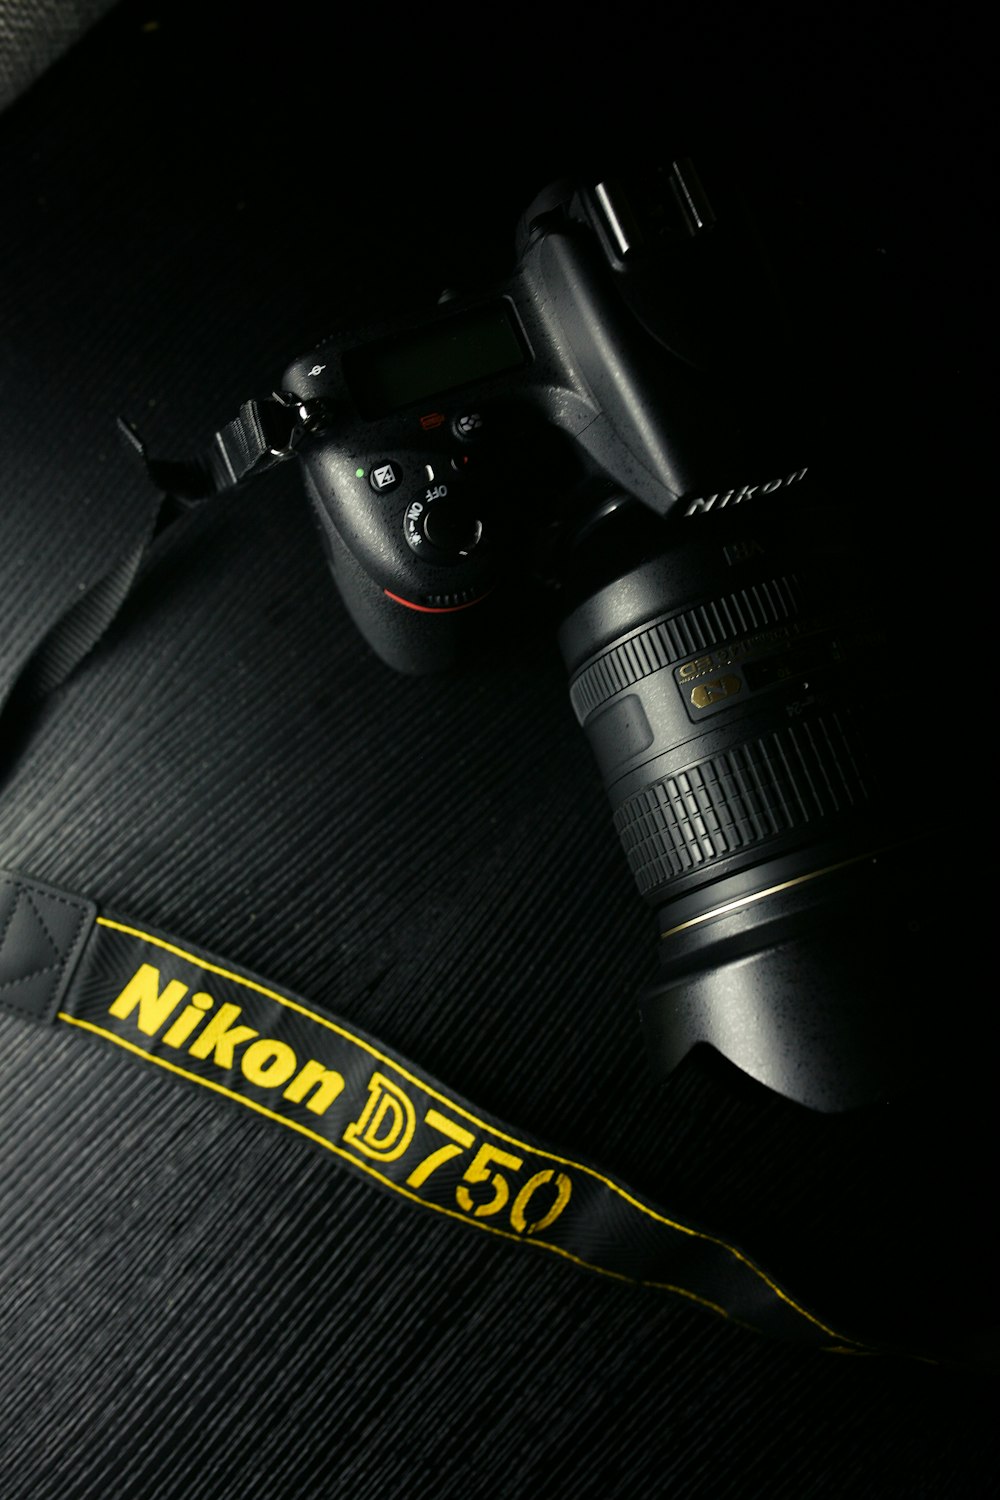 Nikon D750 Pictures | Download Free Images on Unsplash